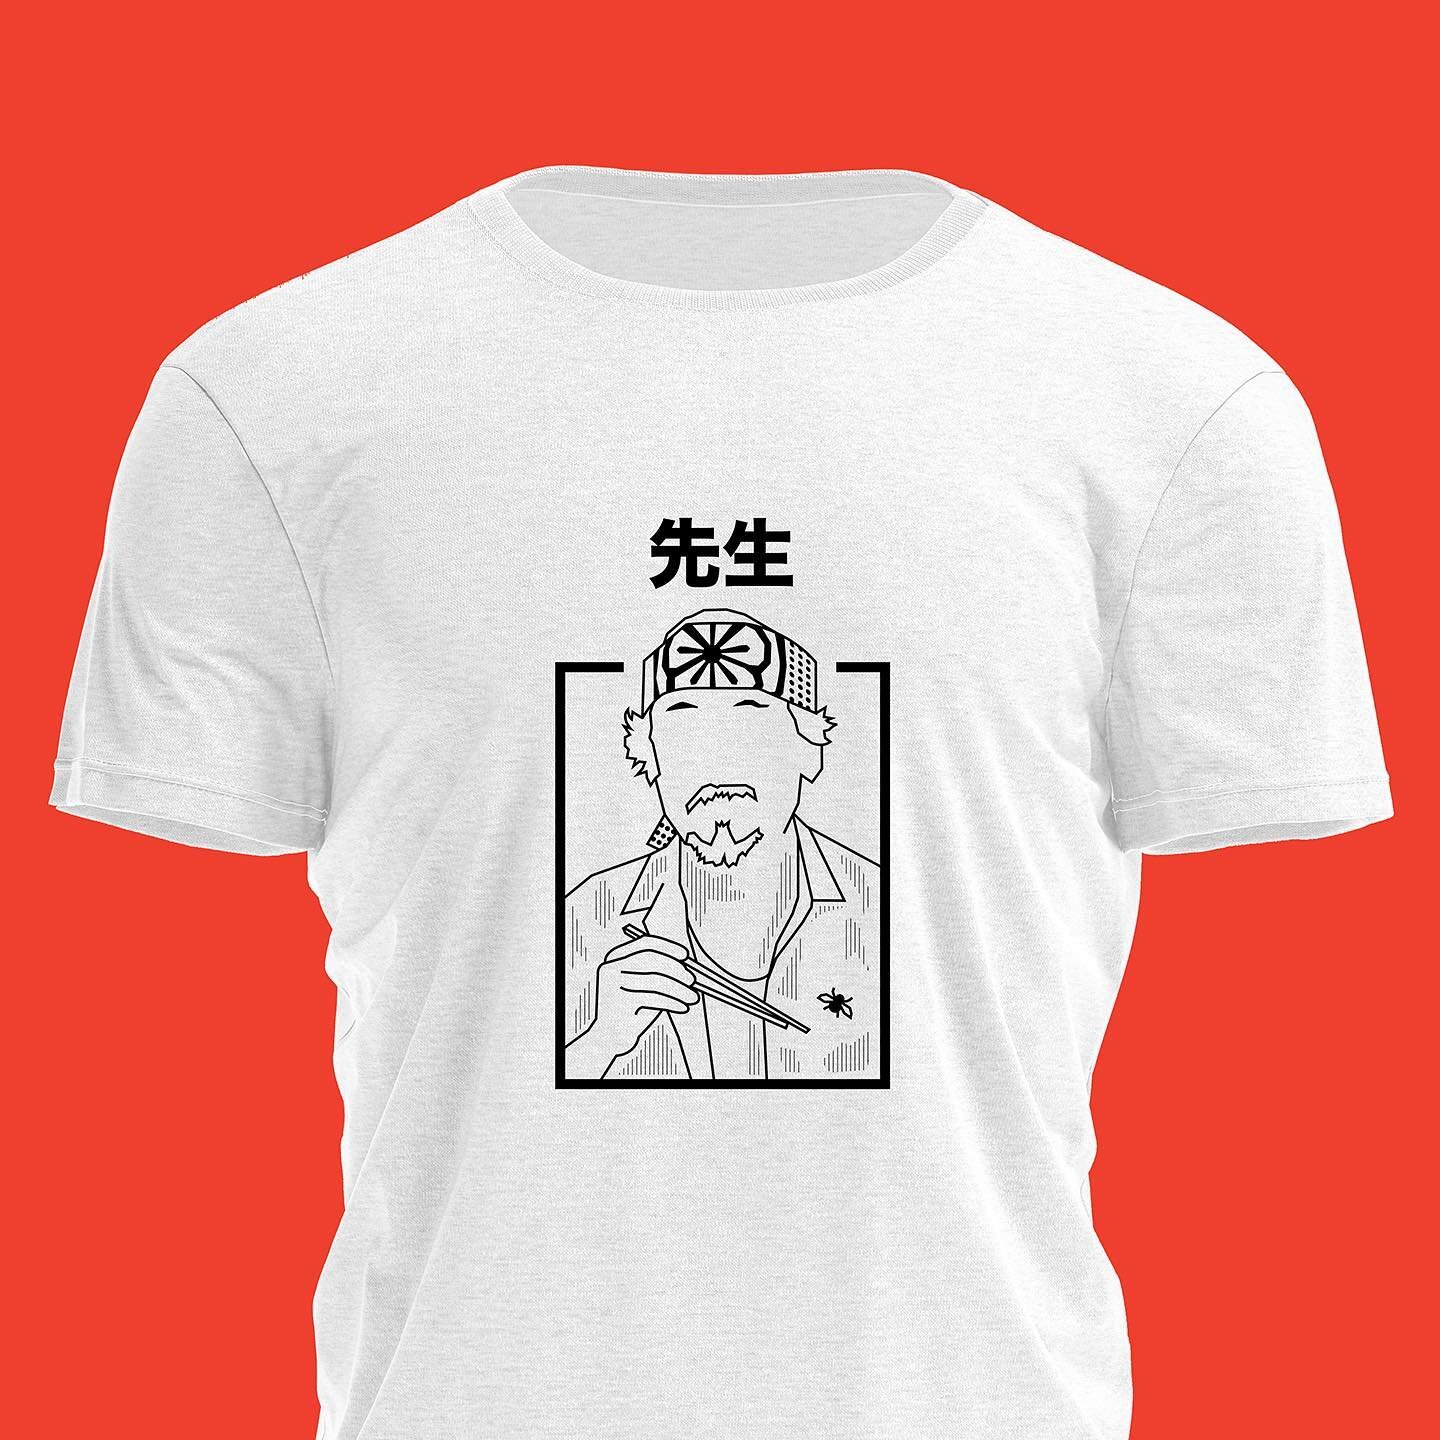 Karate kid t-shirt design 

#tshirt #design #sensei #japanese #sketch #minimalist #minimalist #adobeillustrator #karate #cobrakai #先生 #tshirt #designer #tshirtdesign #mrmiyagi